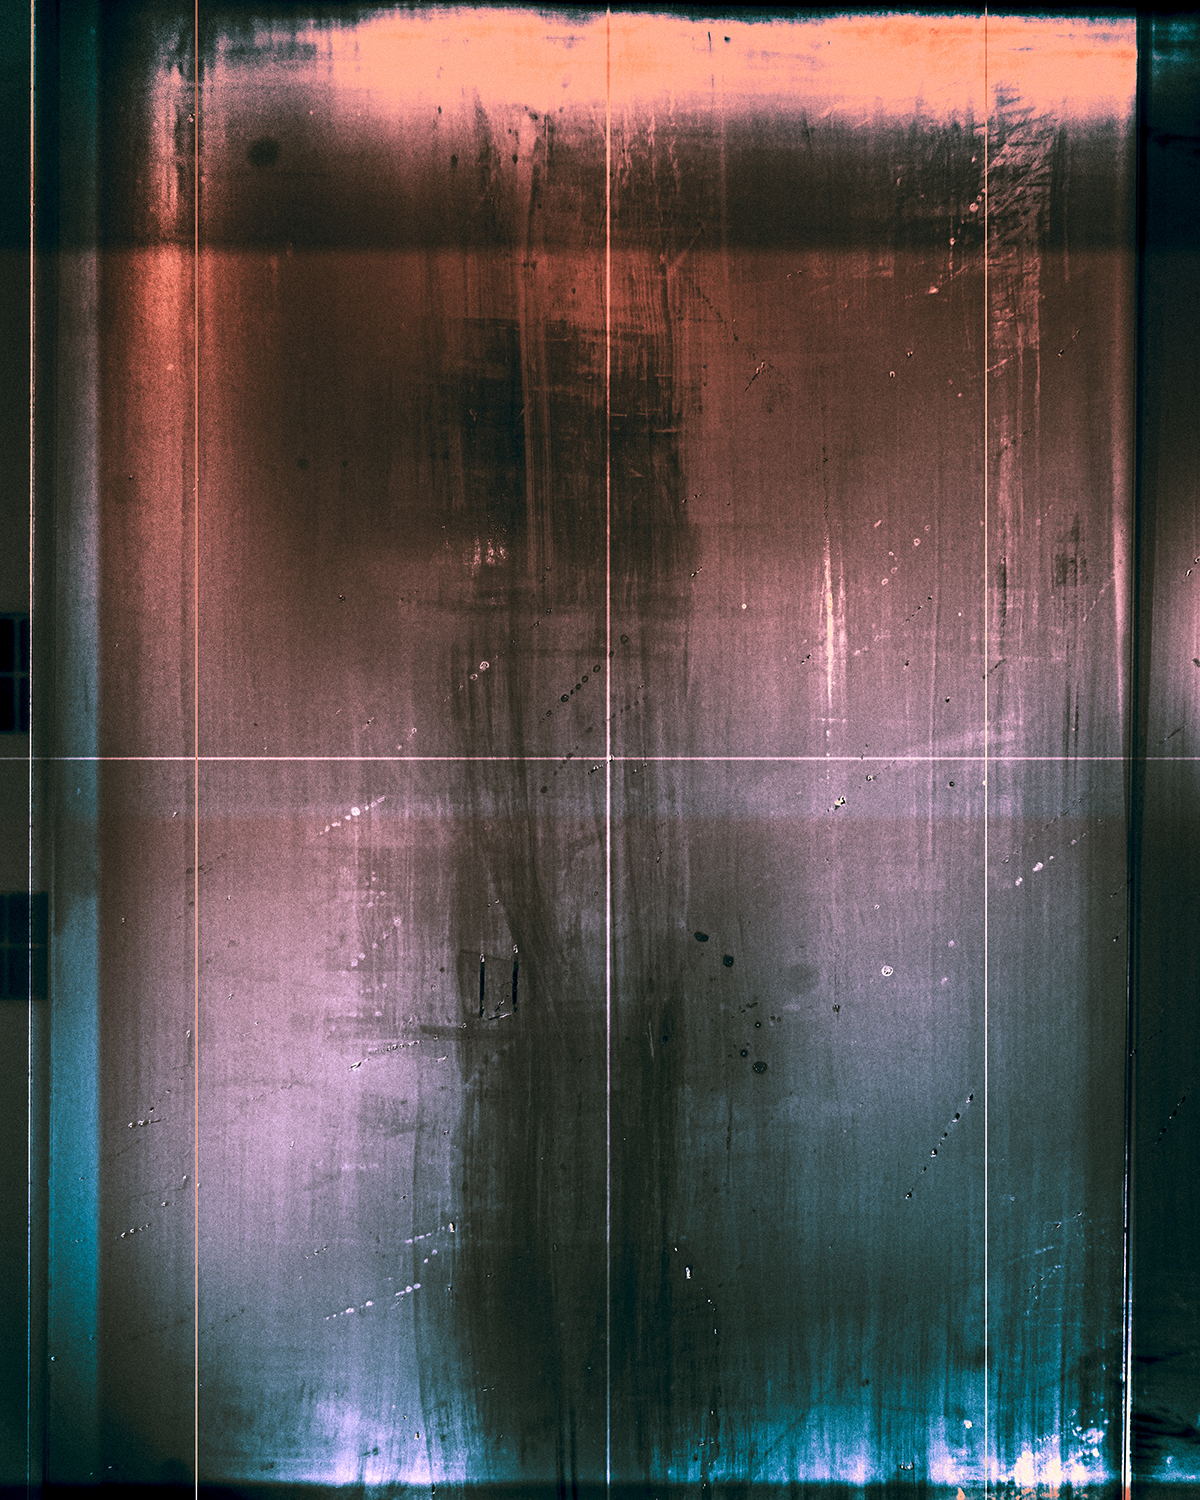 Joris Graaf, Not Quite Tight, Digitally processed photograph, 2020